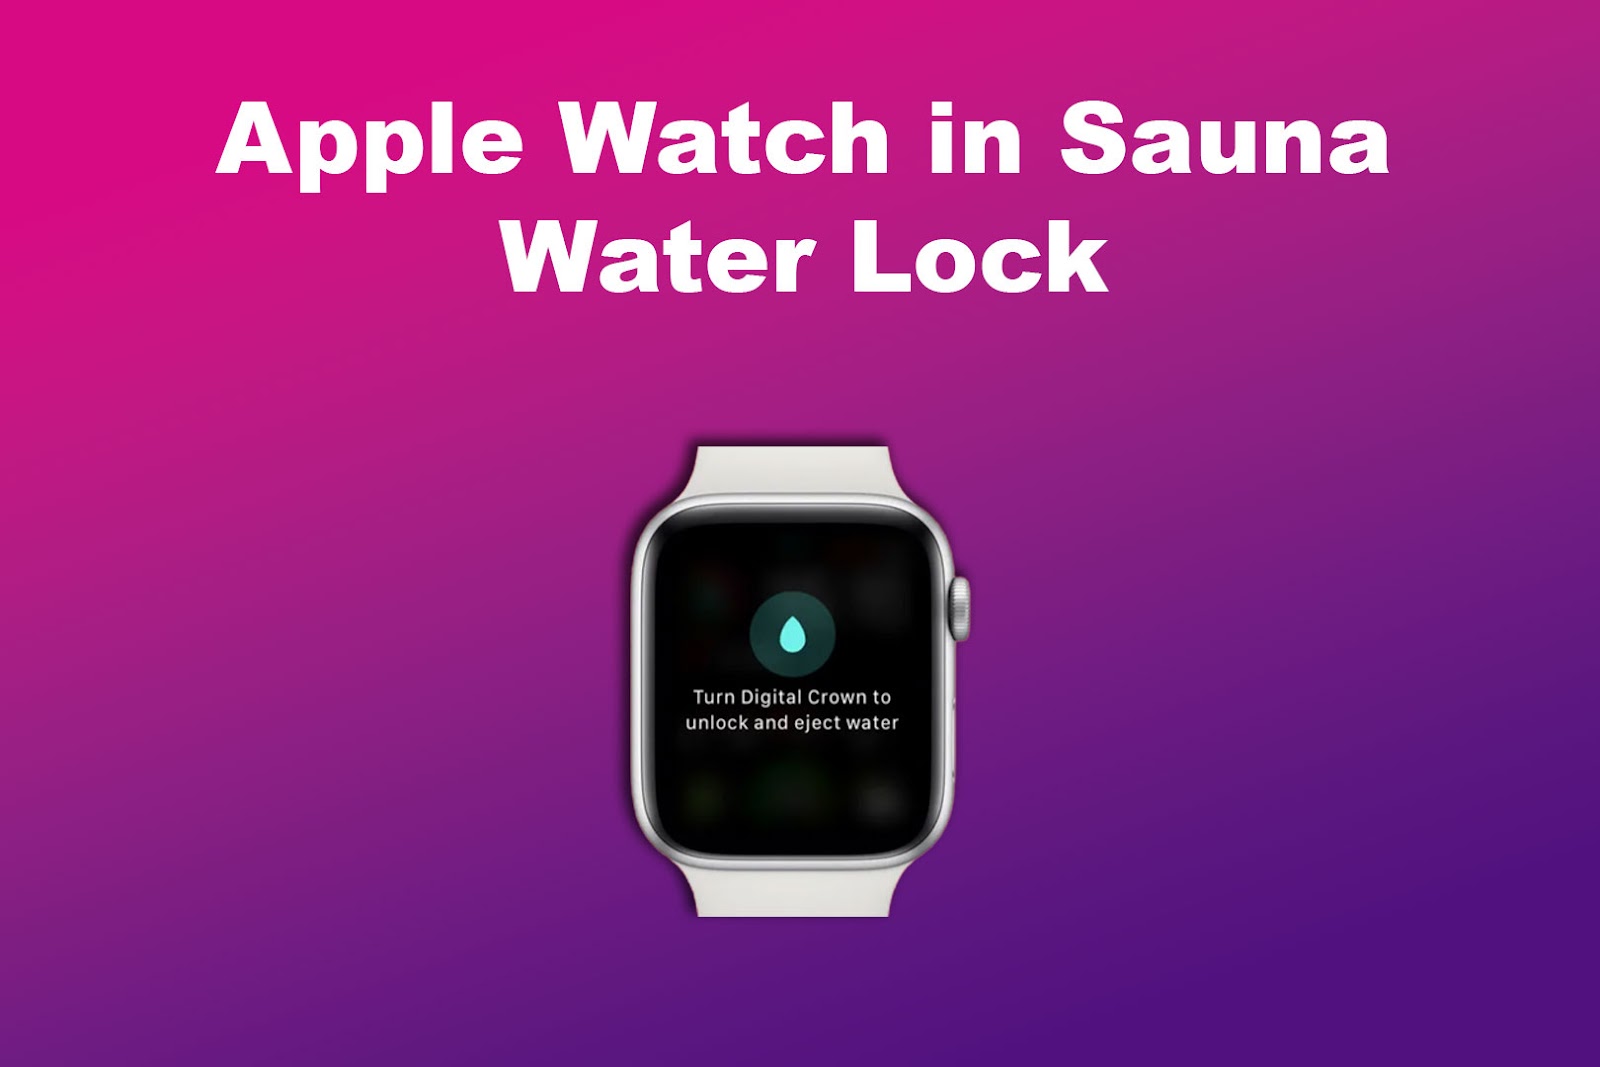 Apple Watch in Sauna Water Lock